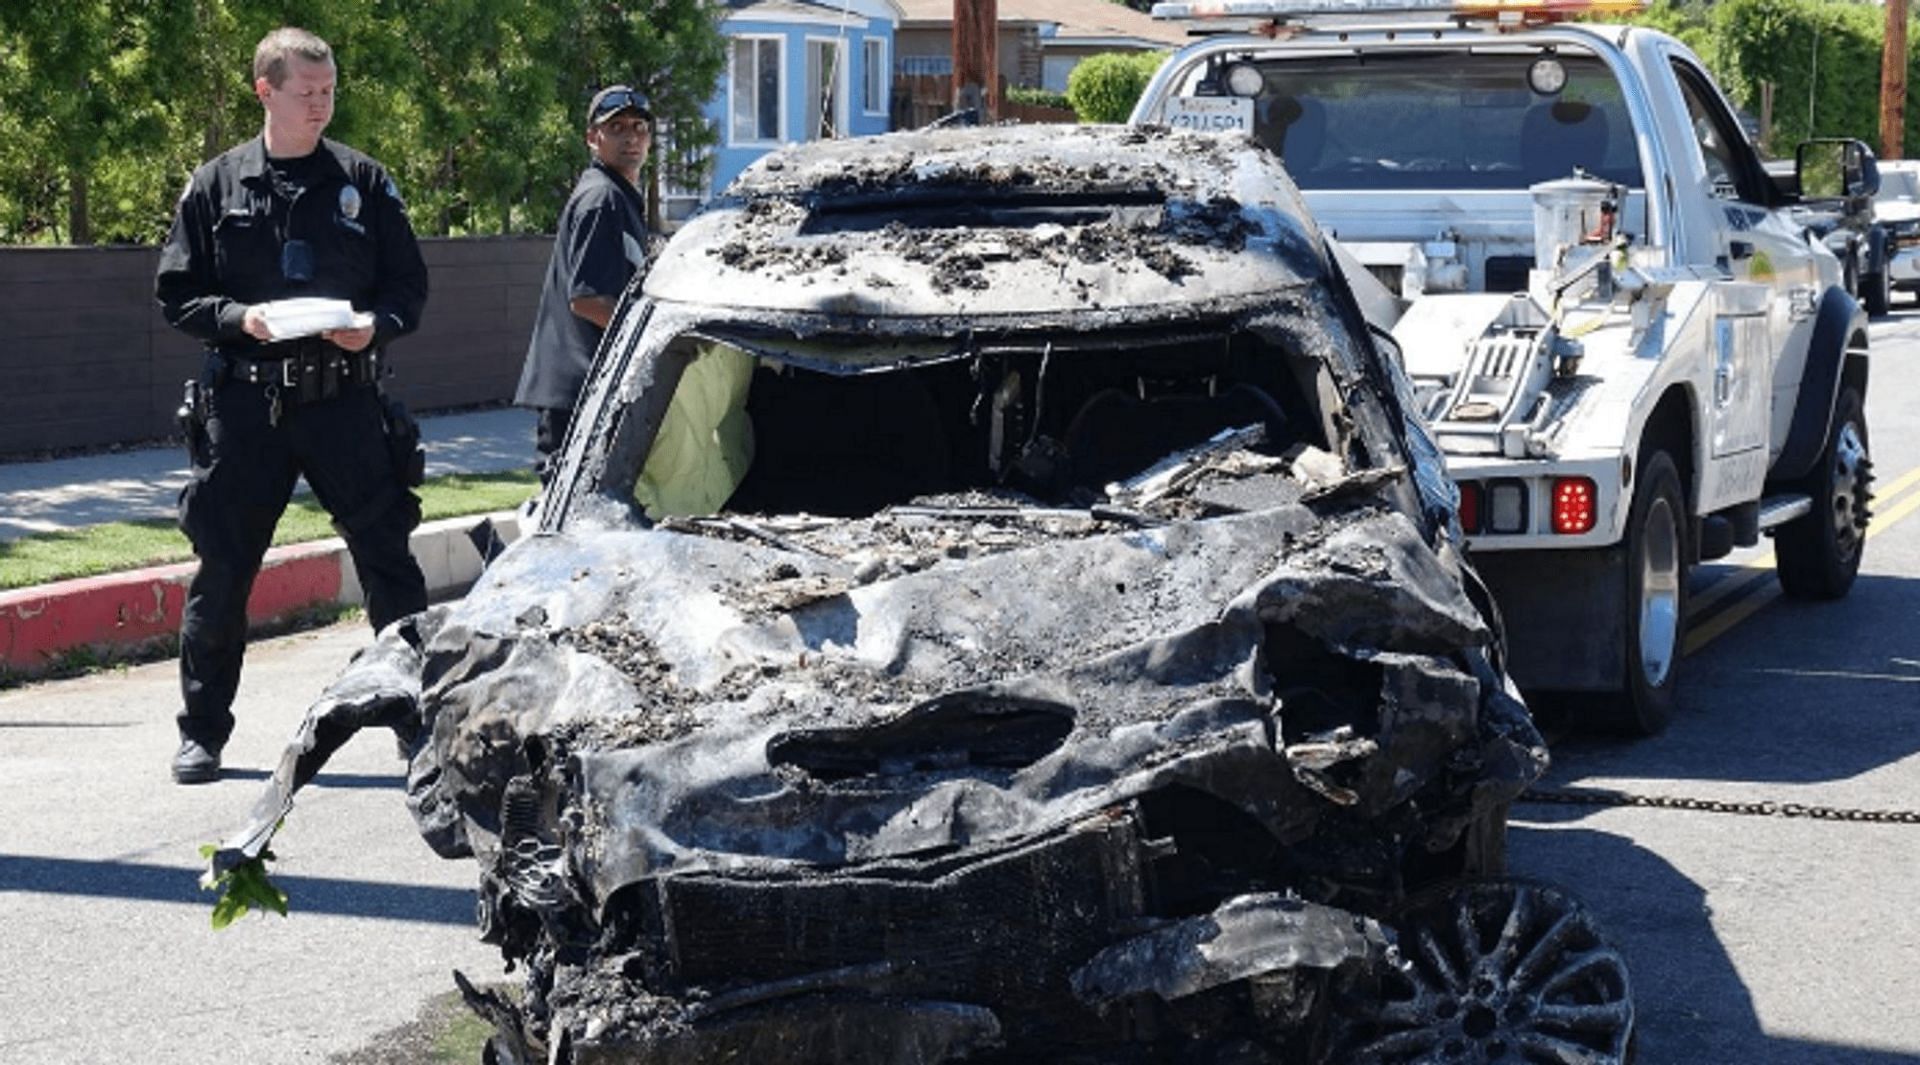 Anne Heche&#039;s damaged vehicle (Image via Backgrid)